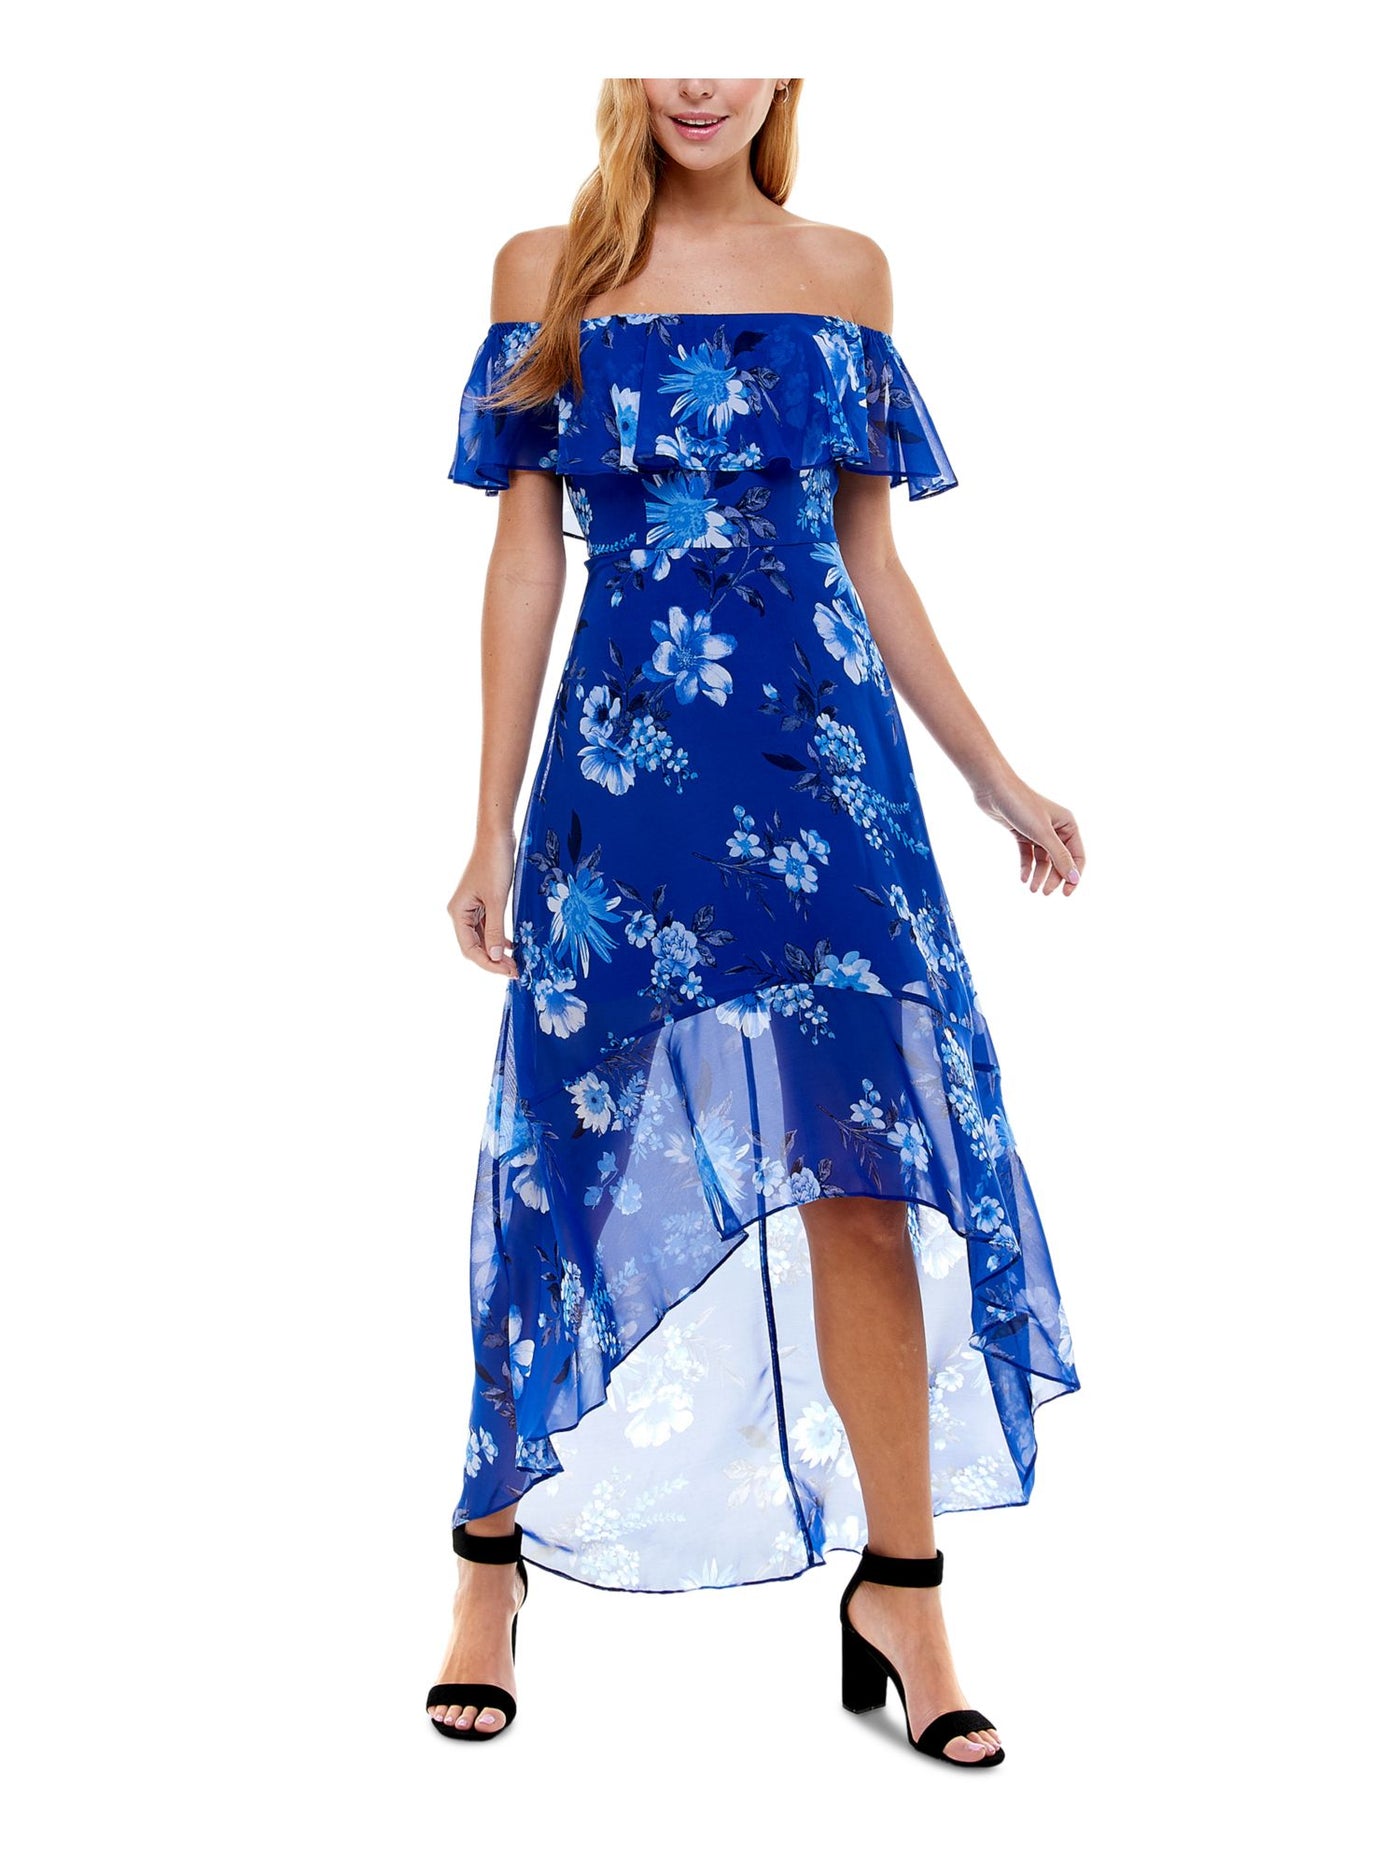 CRYSTAL DOLLS Womens Blue Zippered Ruffled Chiffon Floral Flutter Sleeve Off Shoulder Full-Length Cocktail Hi-Lo Dress Juniors XS